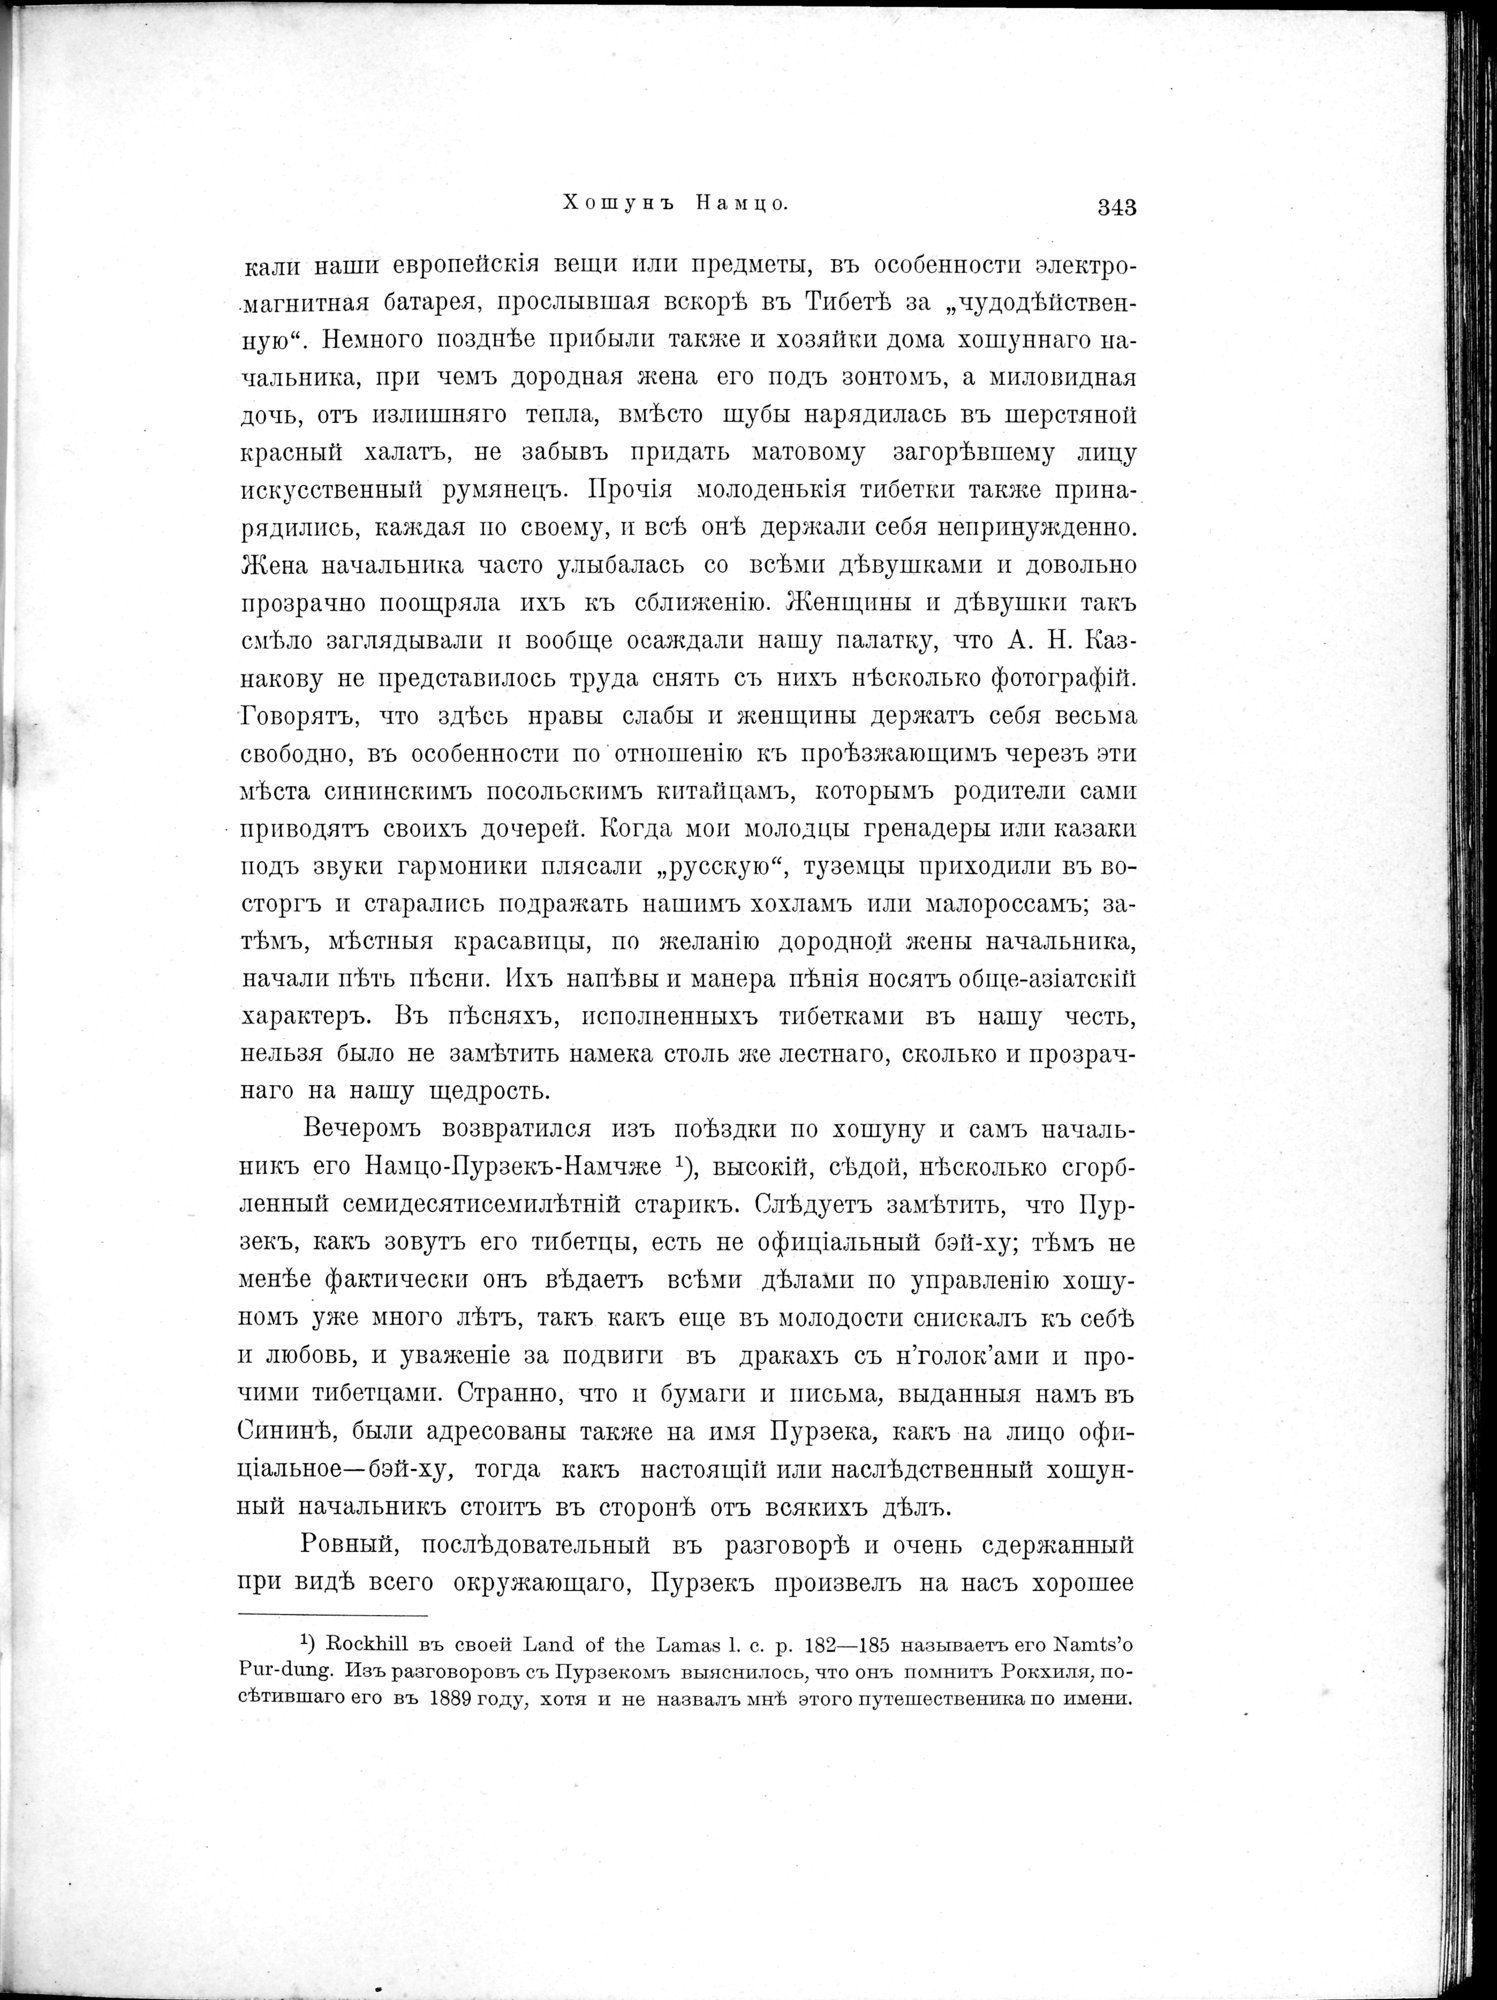 Mongoliia i Kam : vol.2 / Page 115 (Grayscale High Resolution Image)